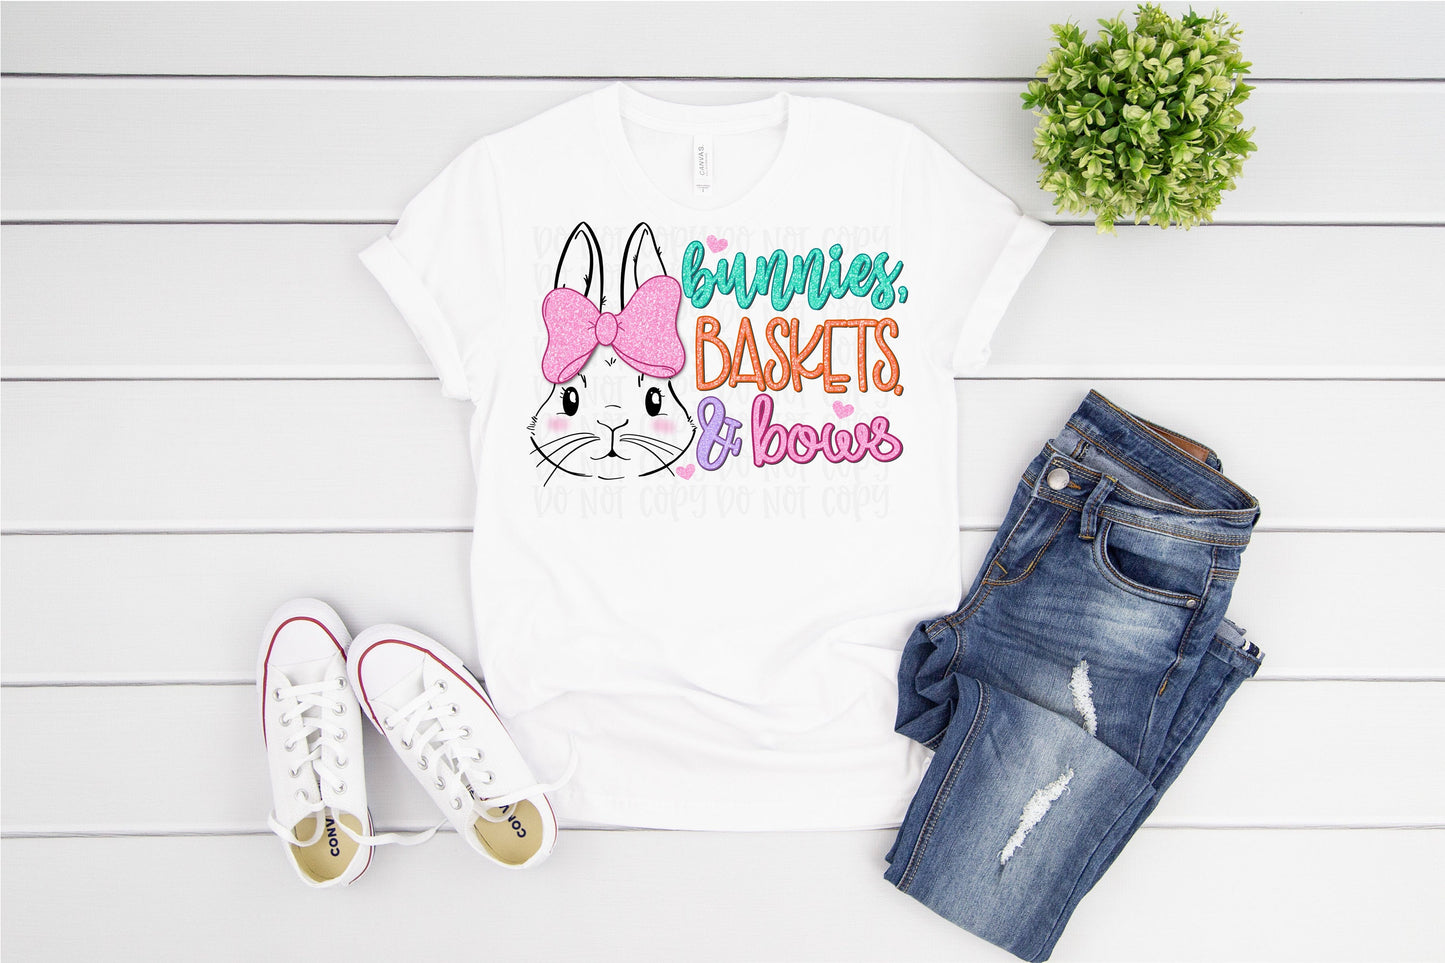 Bunnies Baskets & Bows